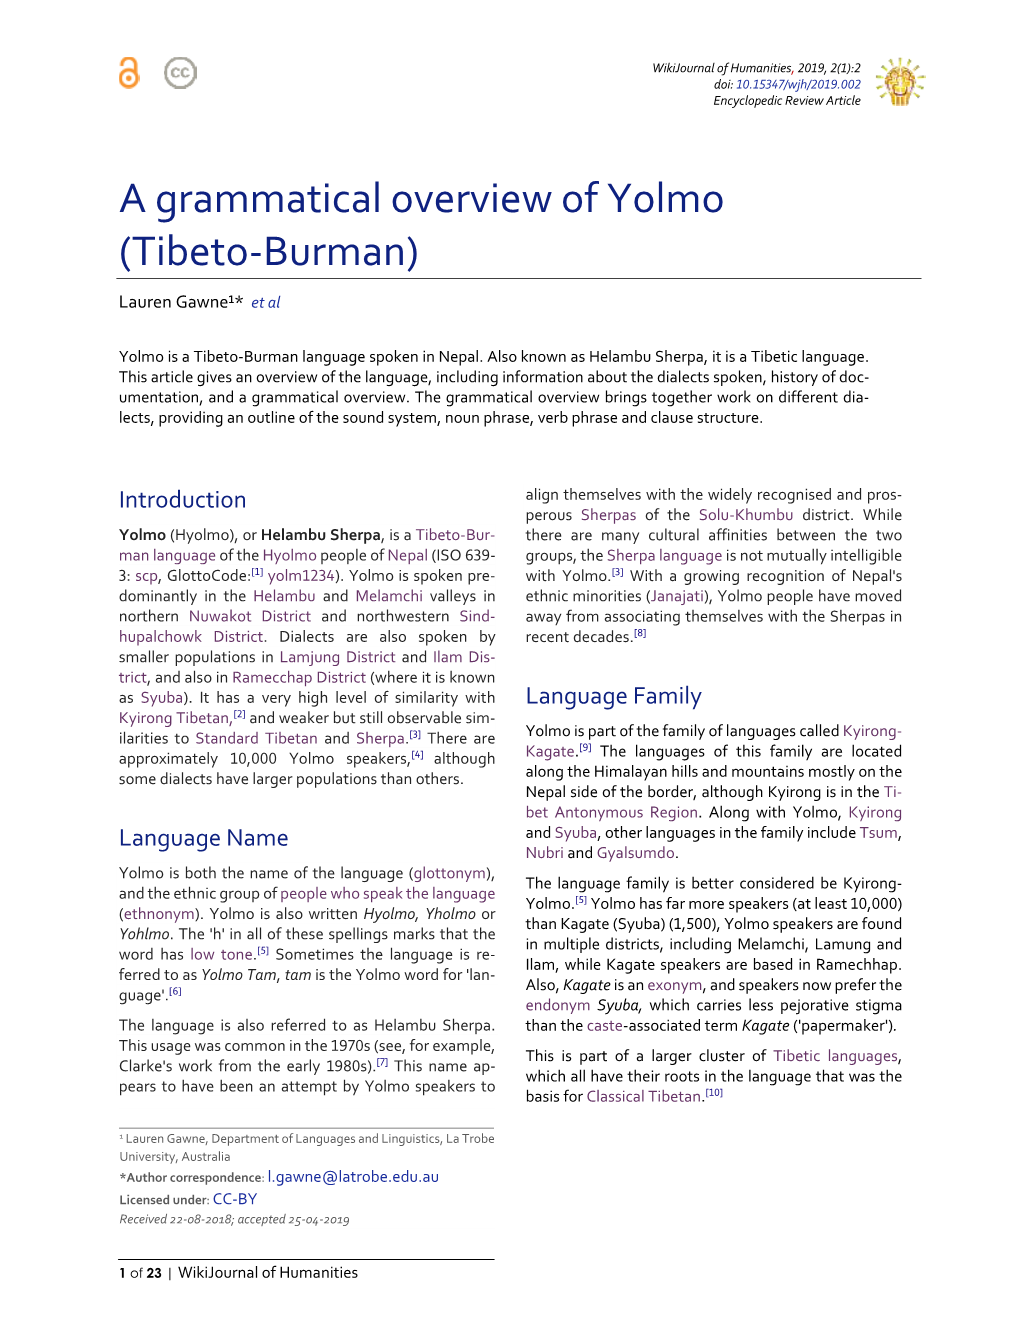 A Grammatical Overview of Yolmo (Tibeto-Burman)